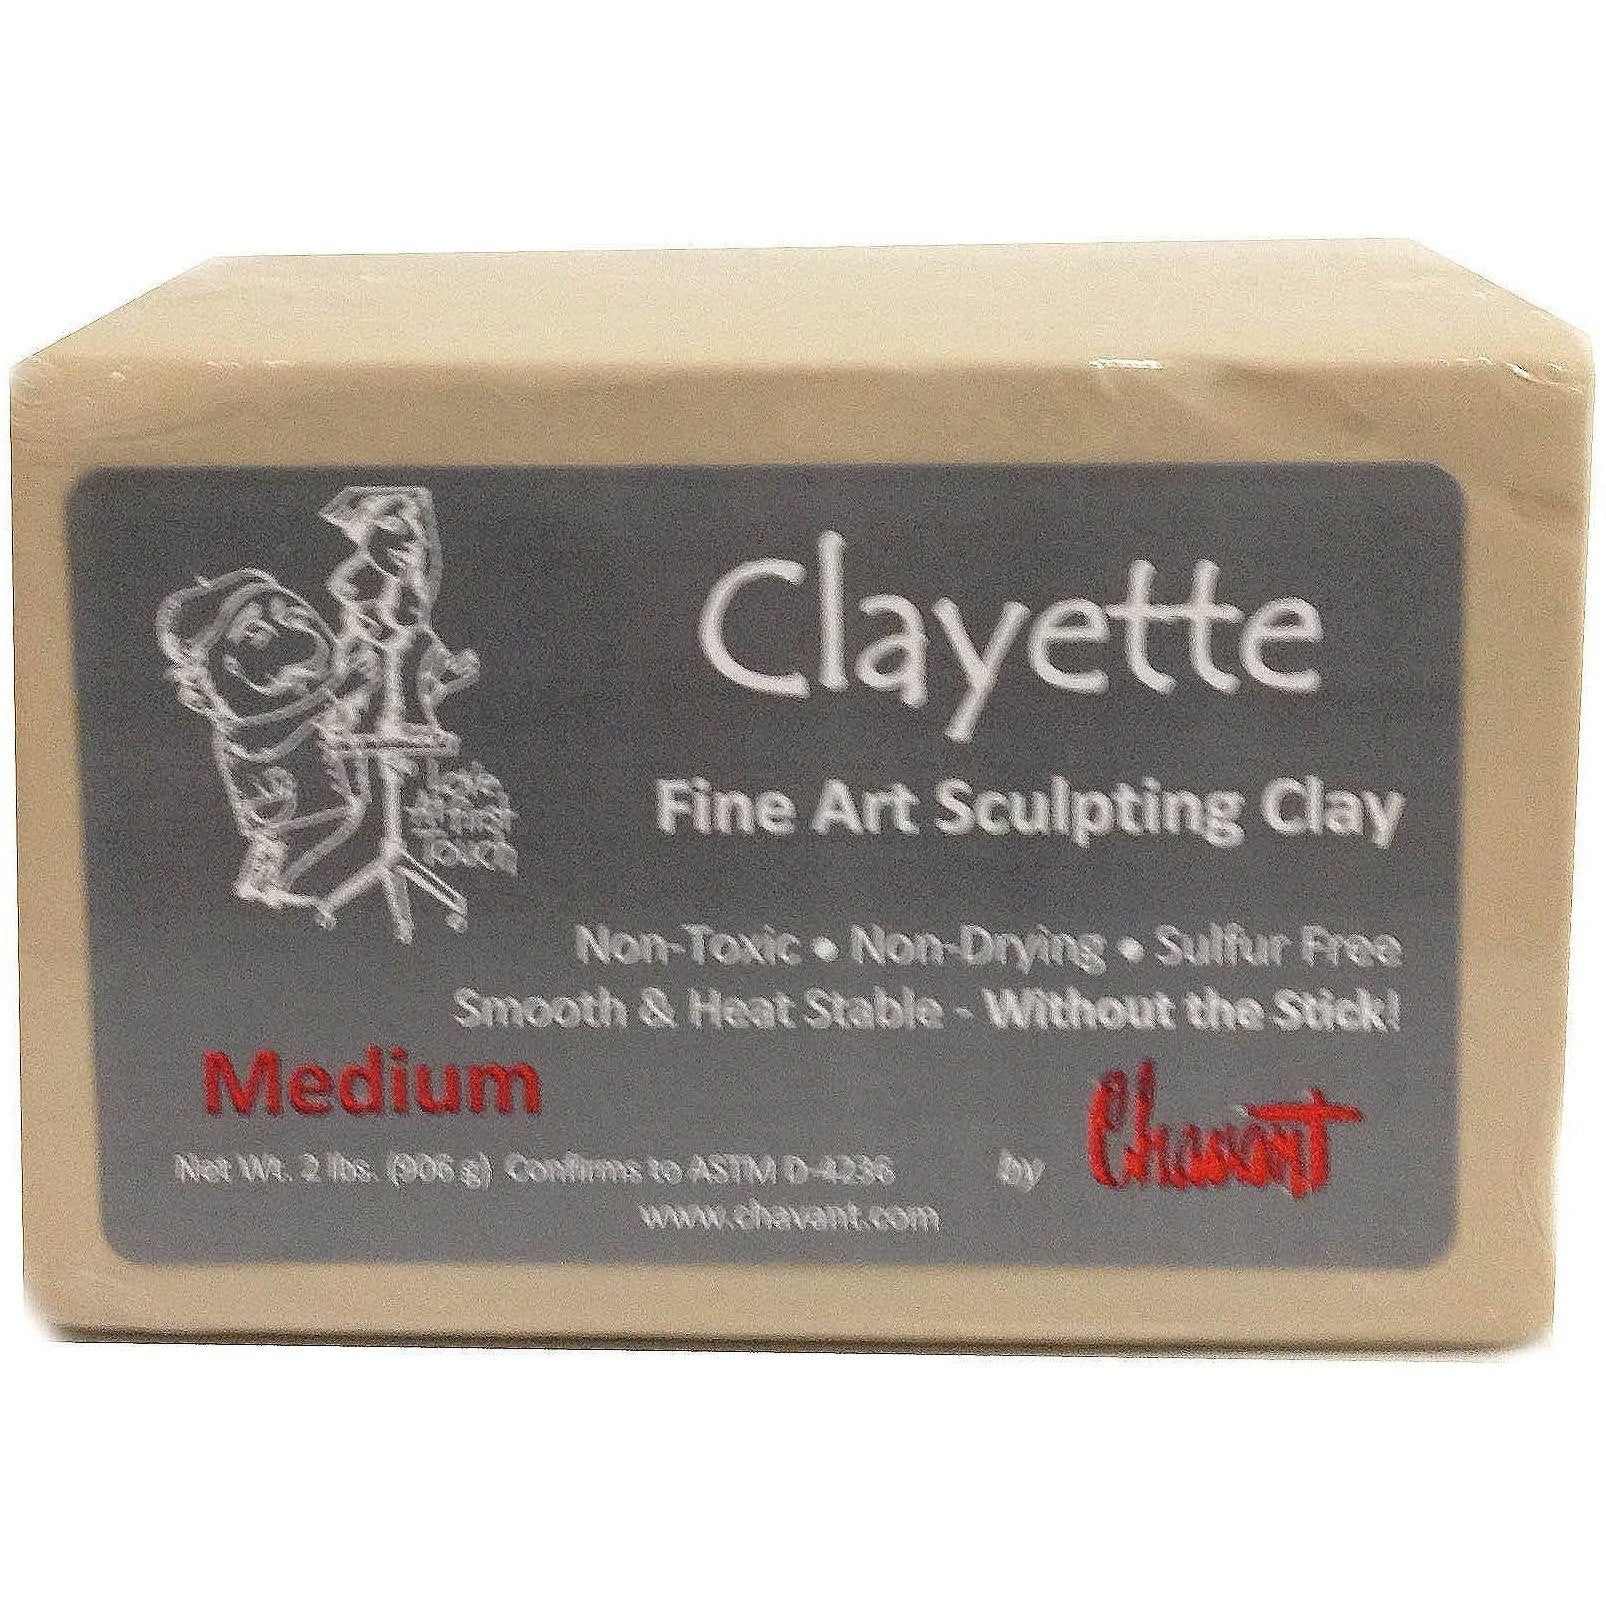 Chavant Professional Plasteline Non-Drying Modelling Clay Sulfur